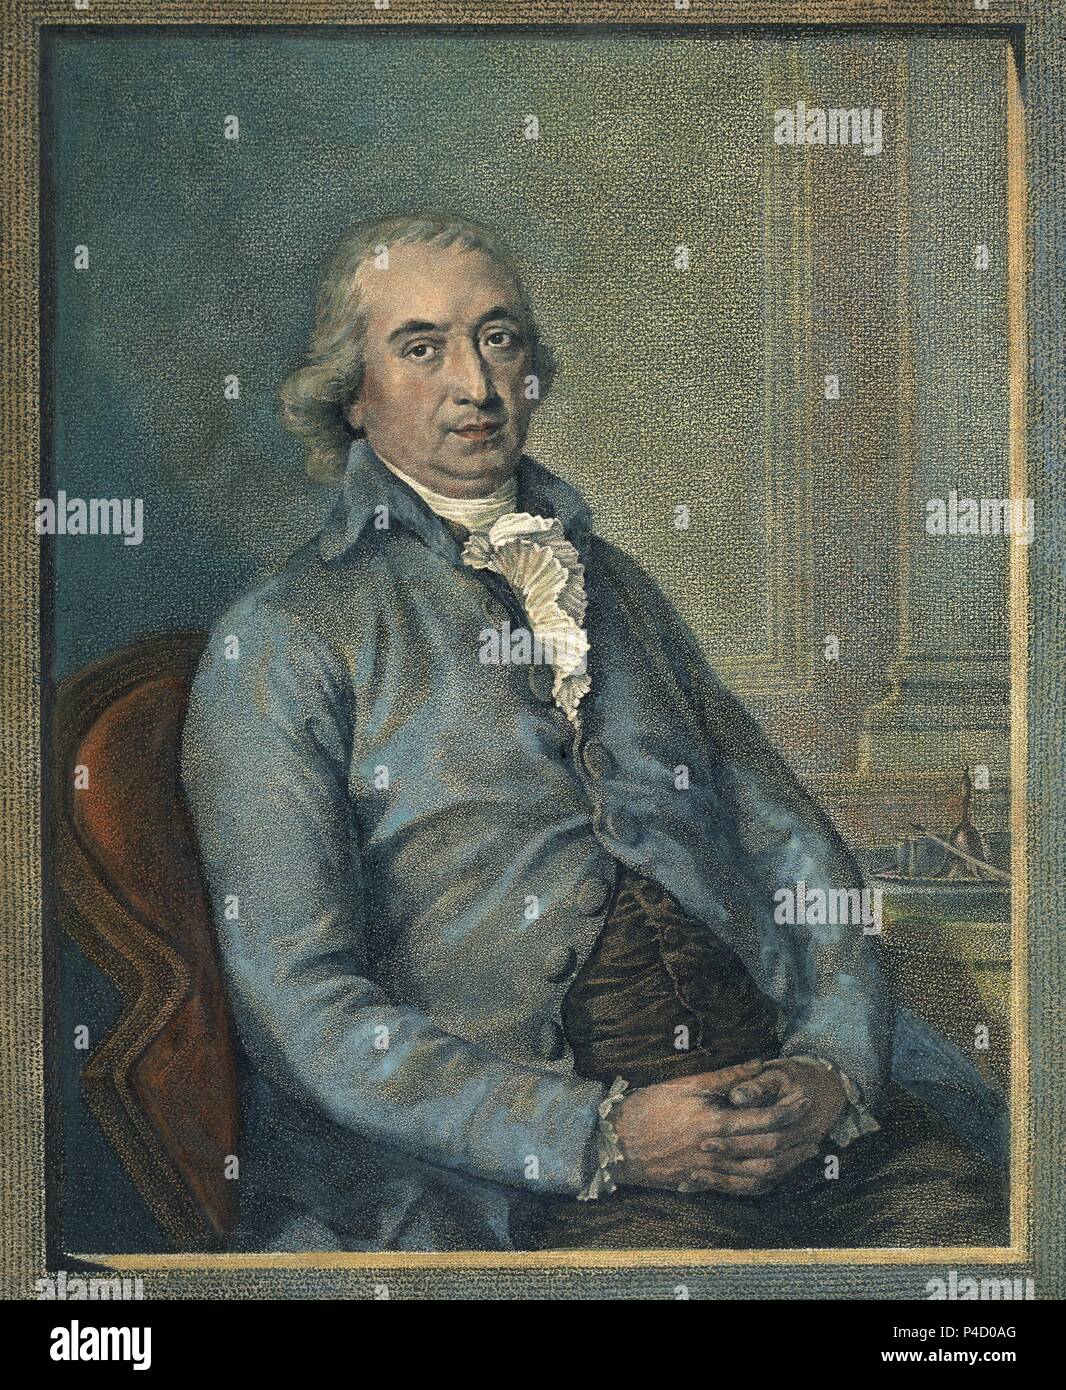 JOHANN GOTTFRIED HERDER - TEOLOGO Y FILOSOFO (1744-1803) -. Foto Stock